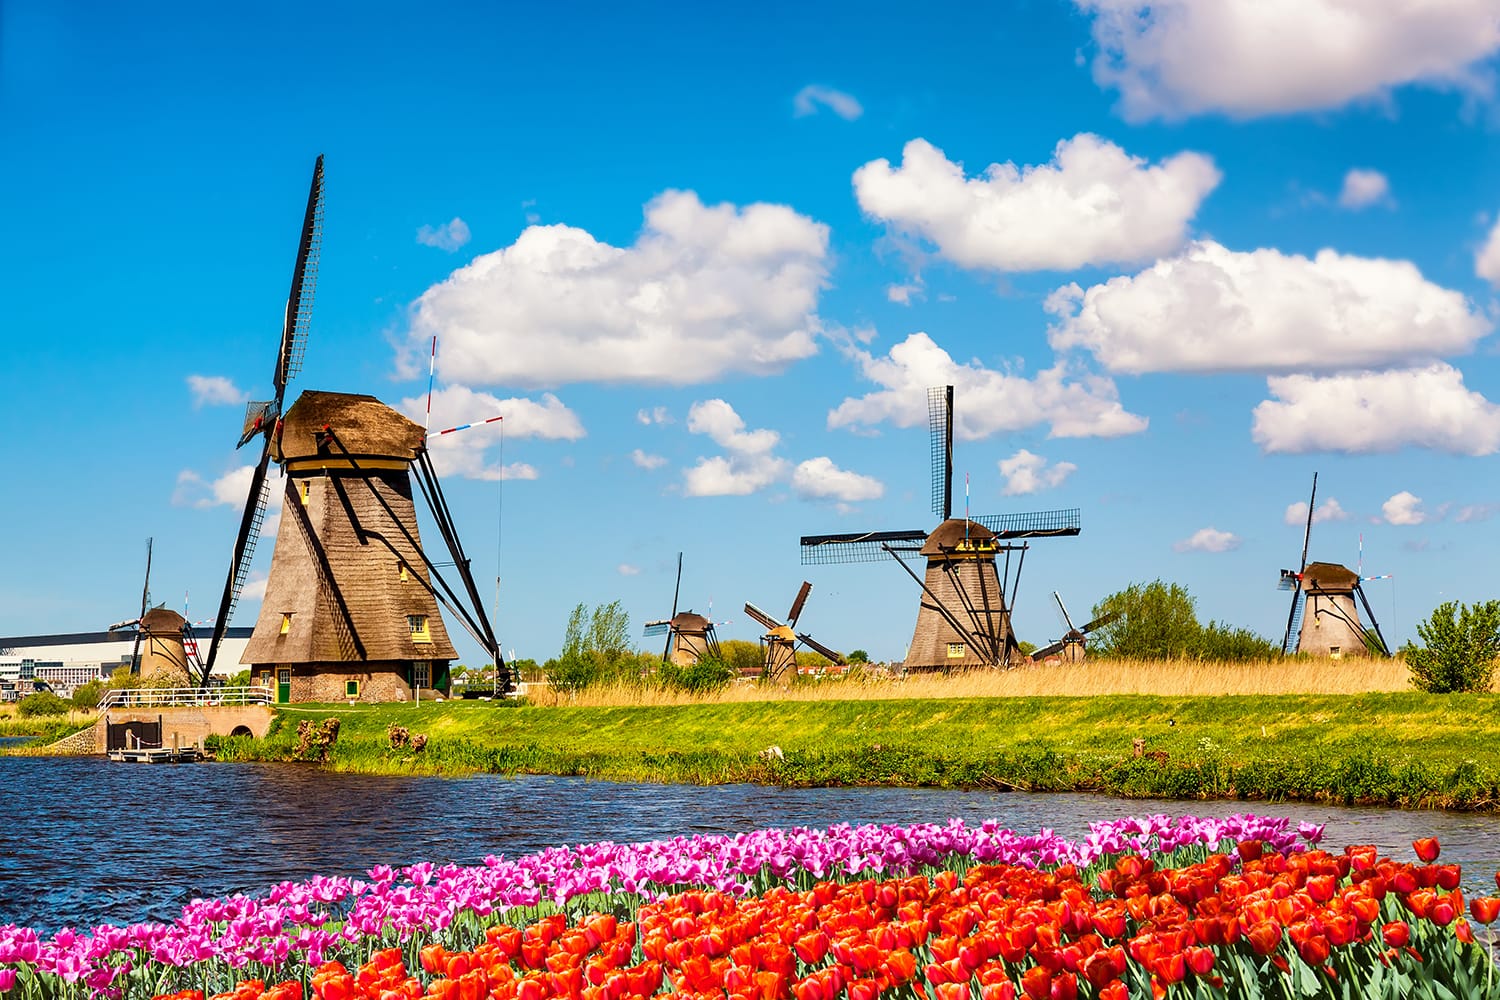 Famous windmills in Kinderdijk village, Netherlands